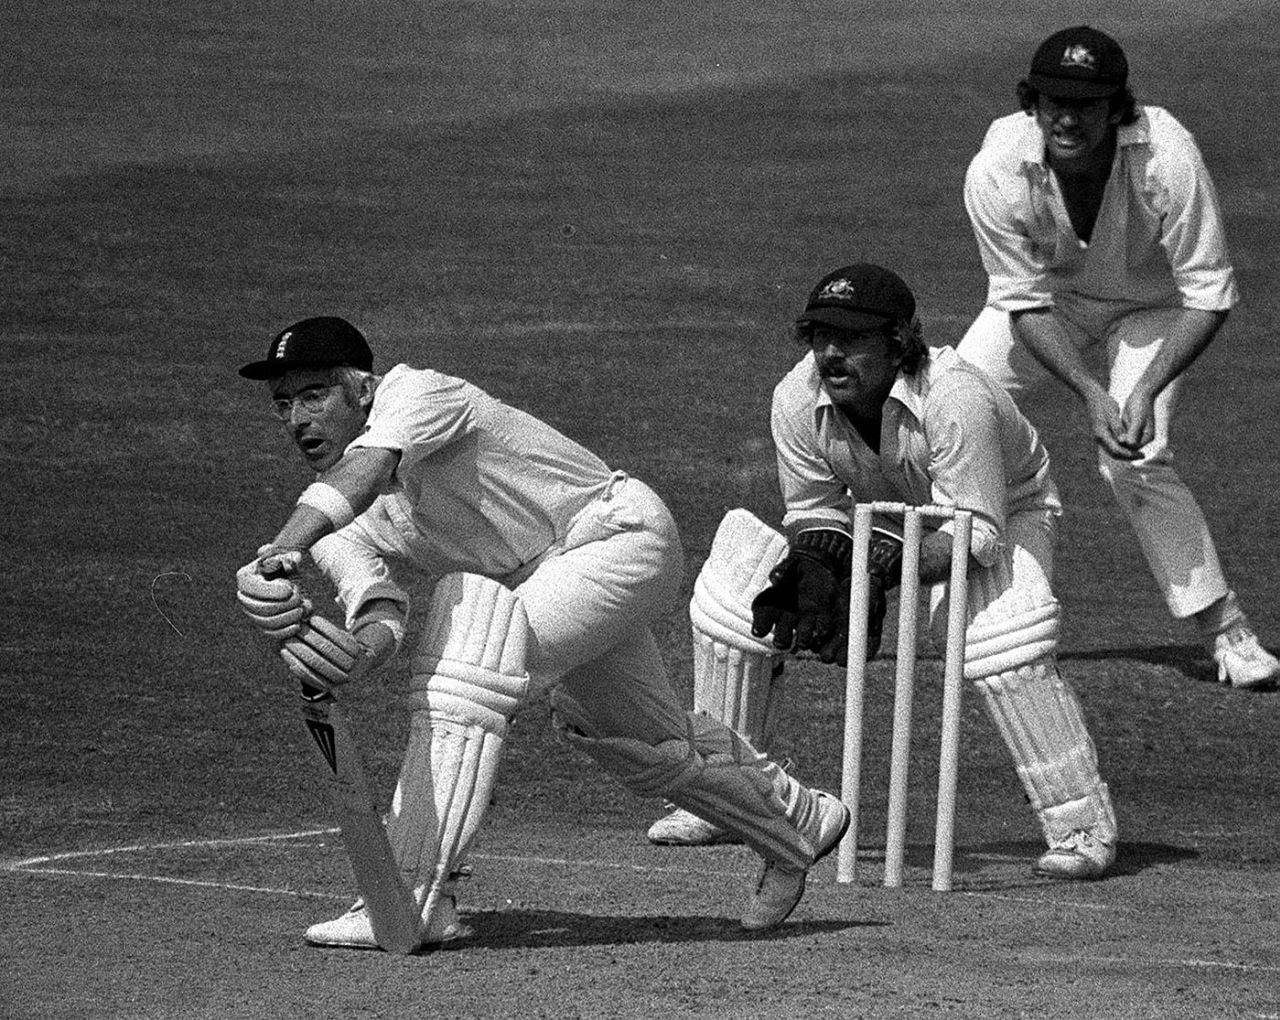 David Steele defends, England v Australia, 4th Test, The Oval, August 30, 1975